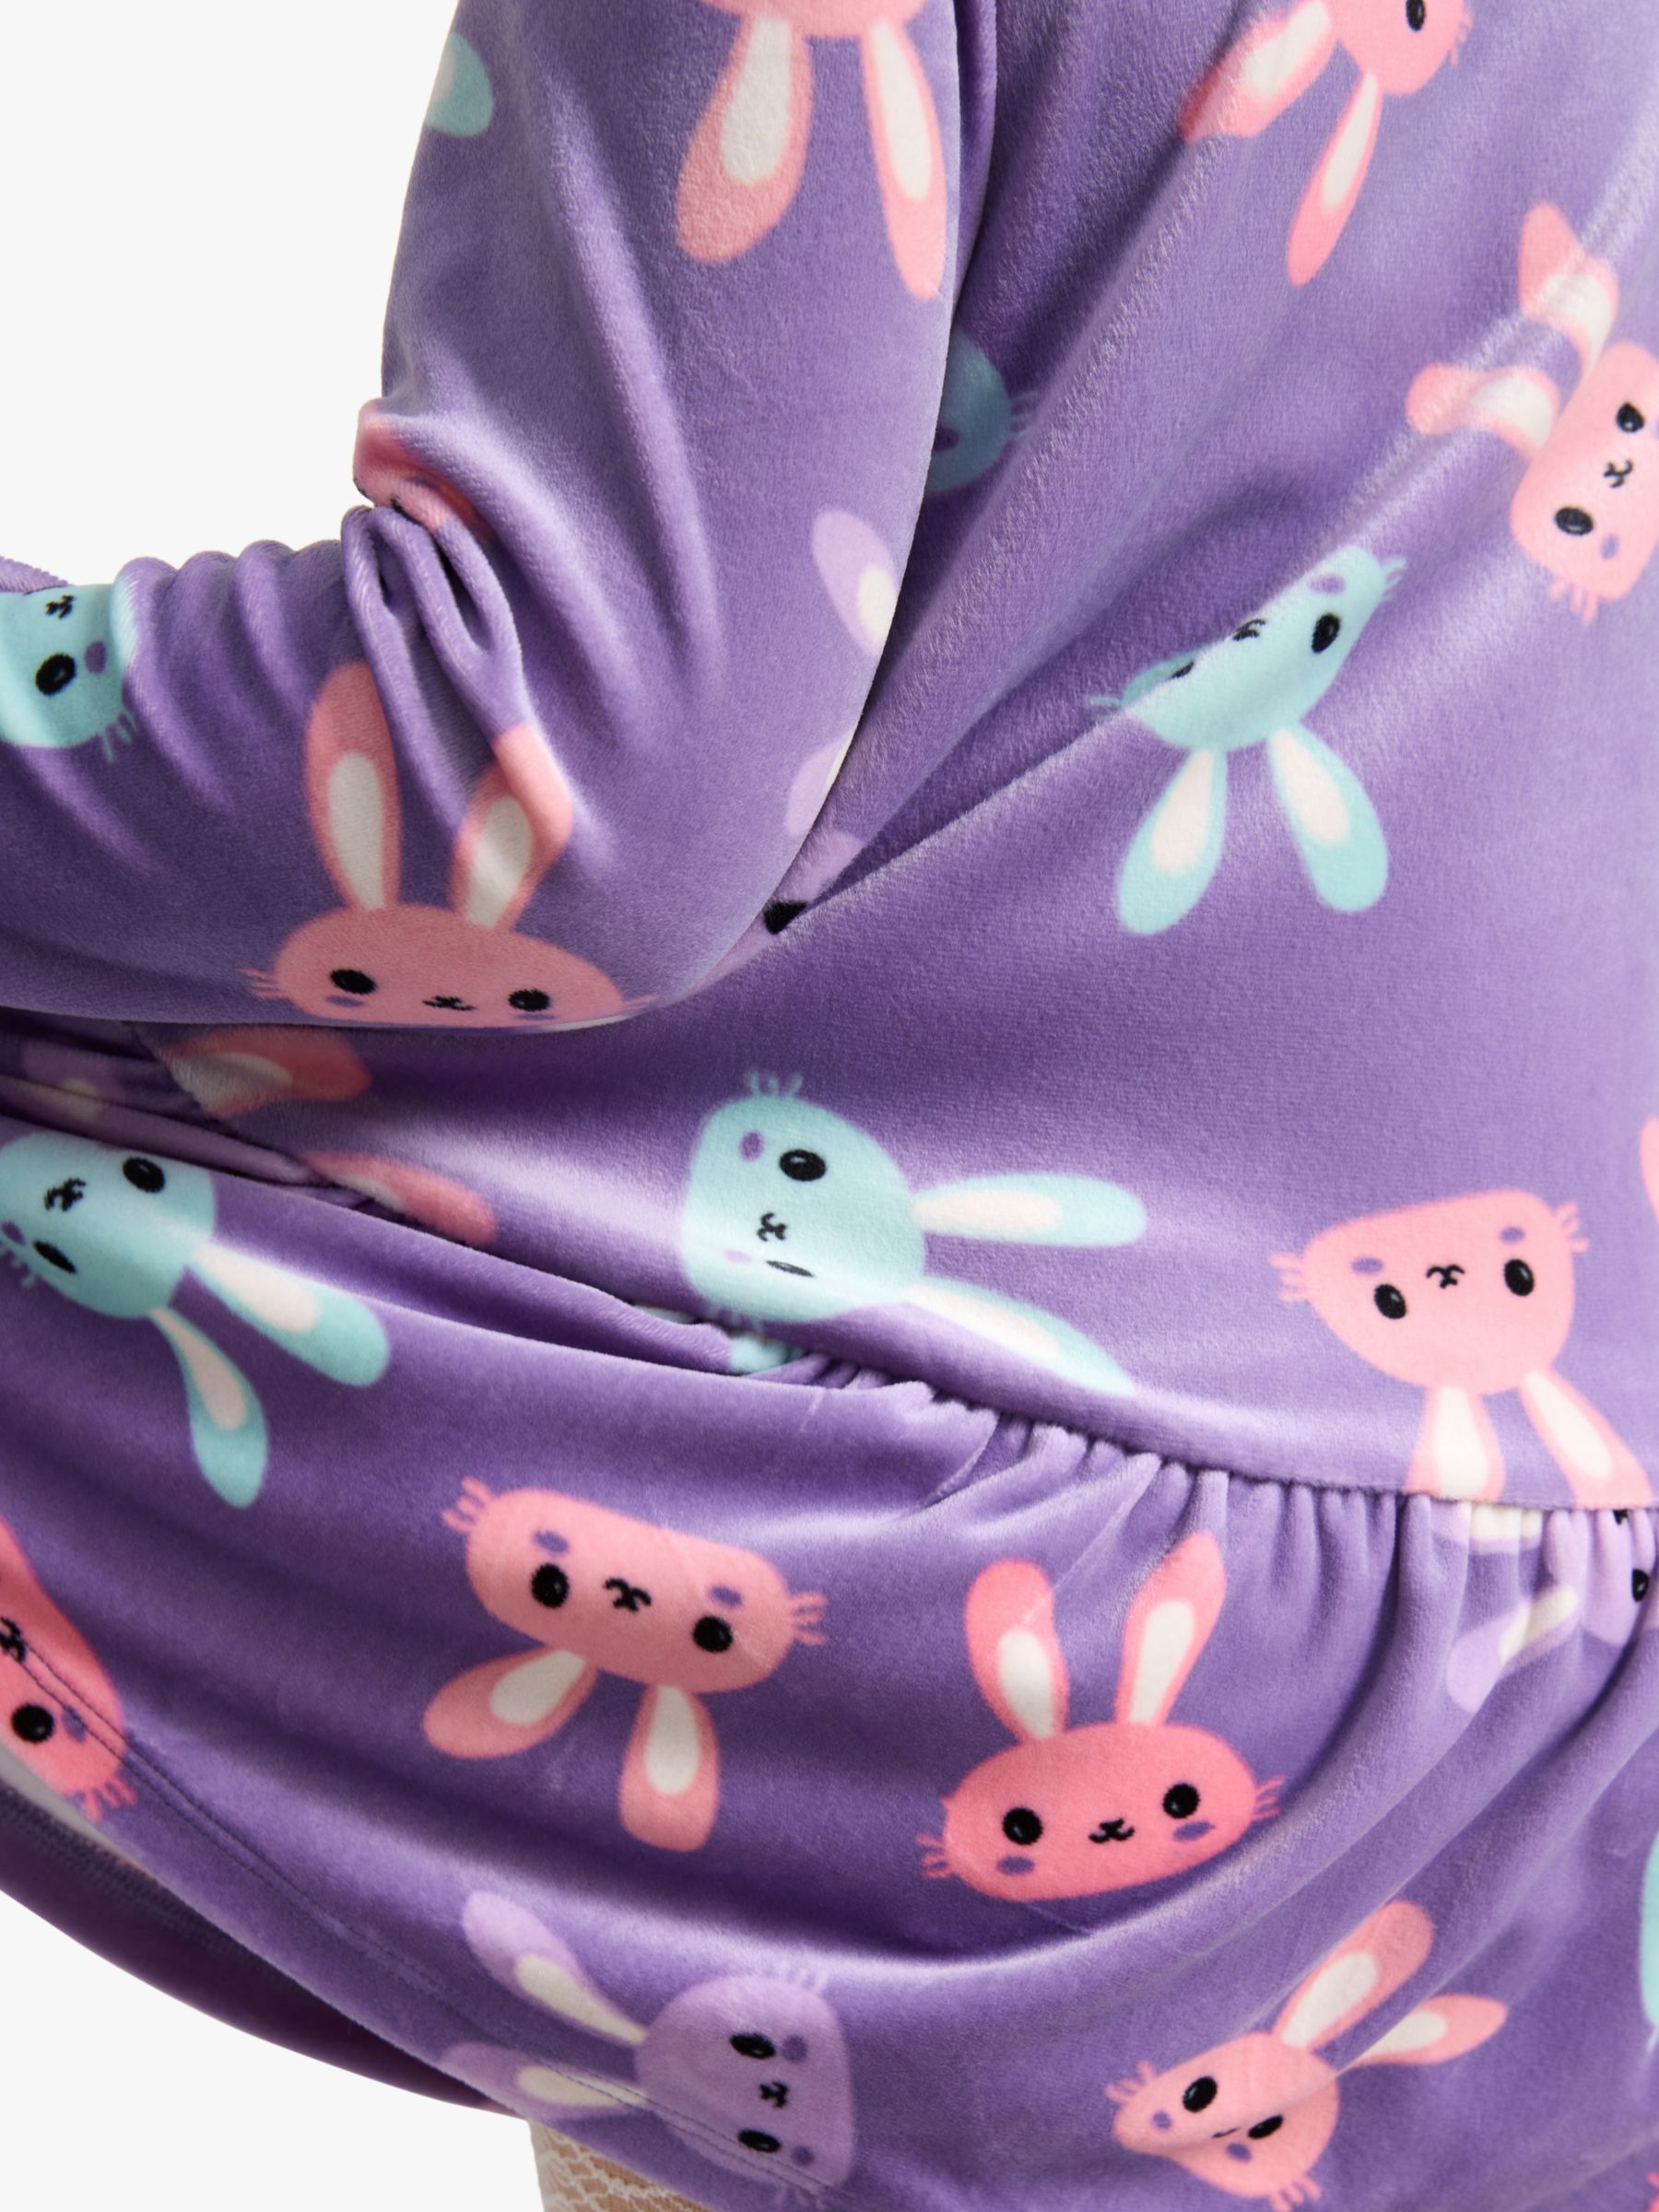 Buy Lindex Kids' Rabbit Print Velour Tunic, Light Dusty Lilac Online at johnlewis.com